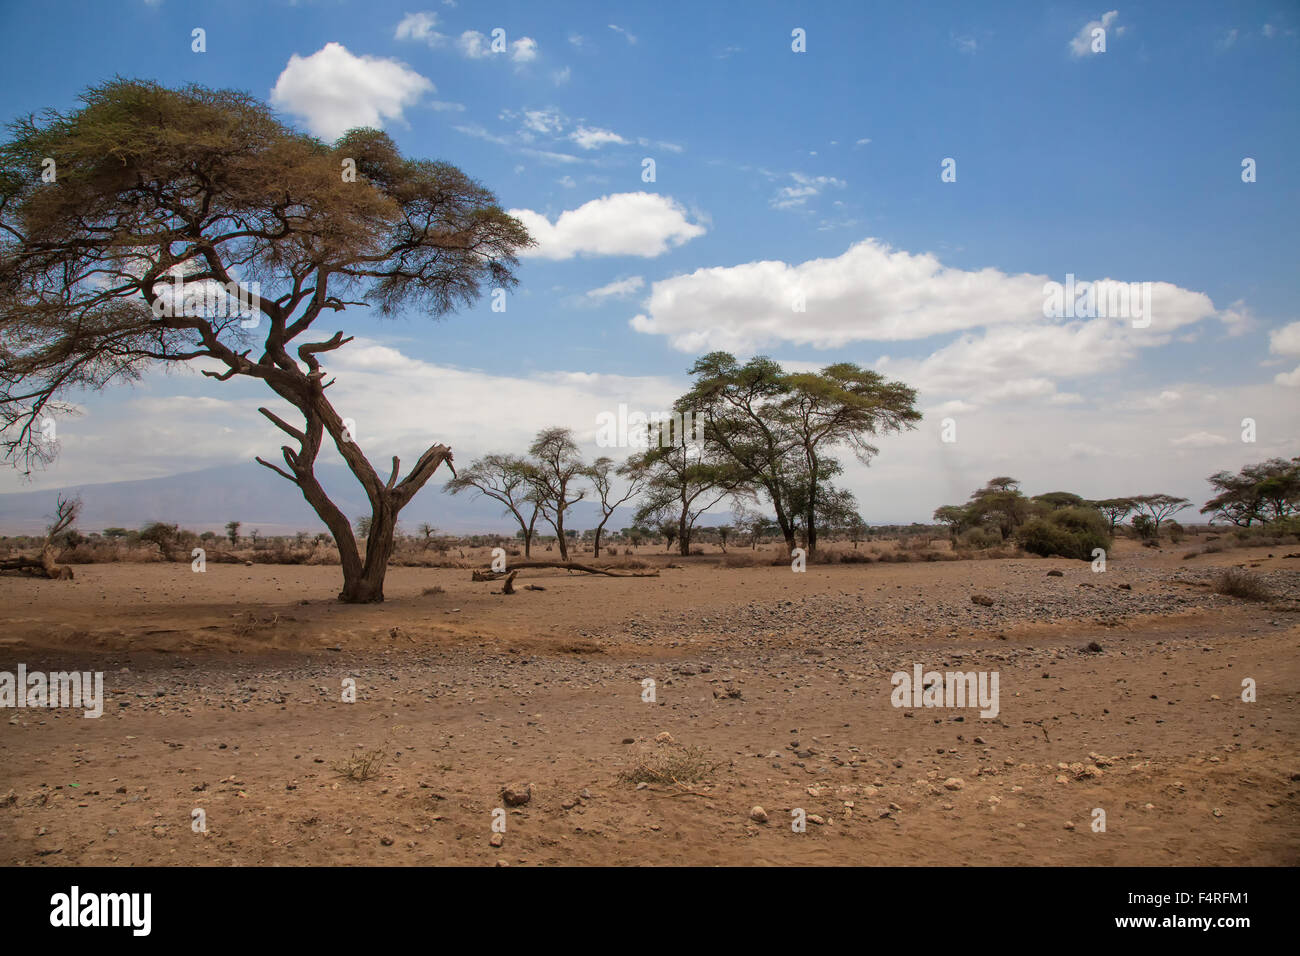 Africa, trees, semi desert, scenery, landscape, travel, steppe, Tanzania Stock Photo